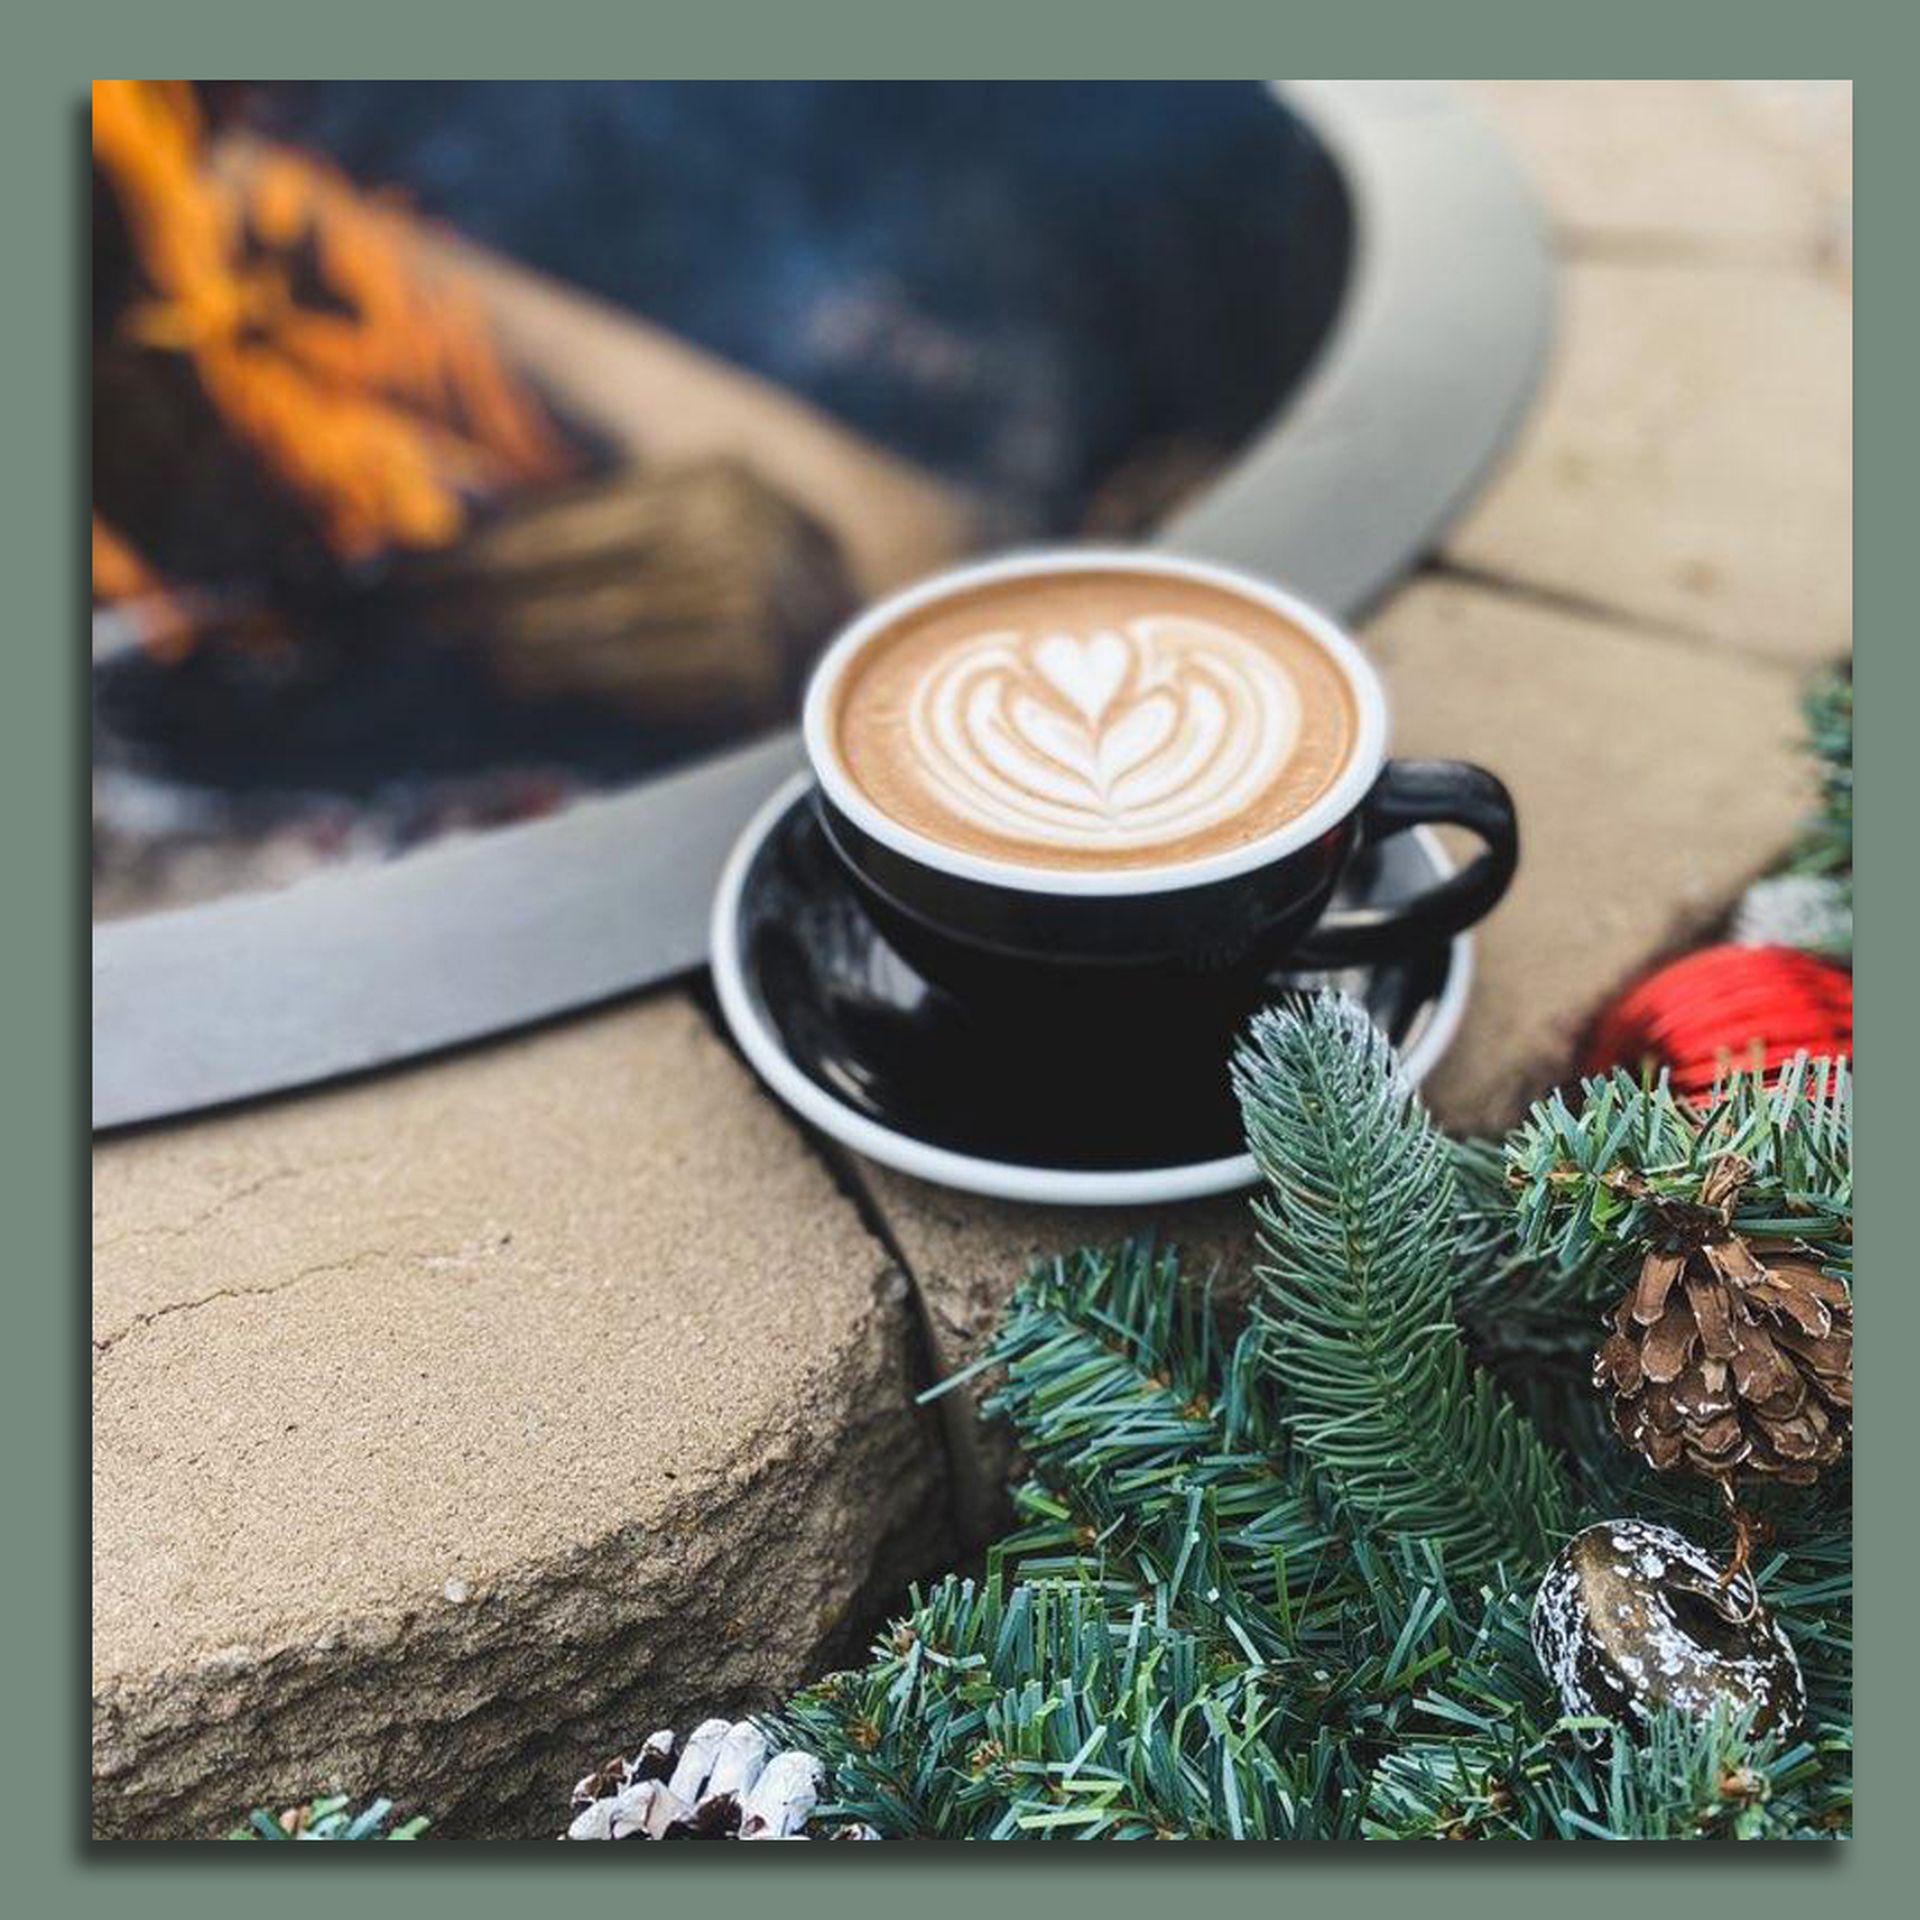 coffee latte art next to a fire